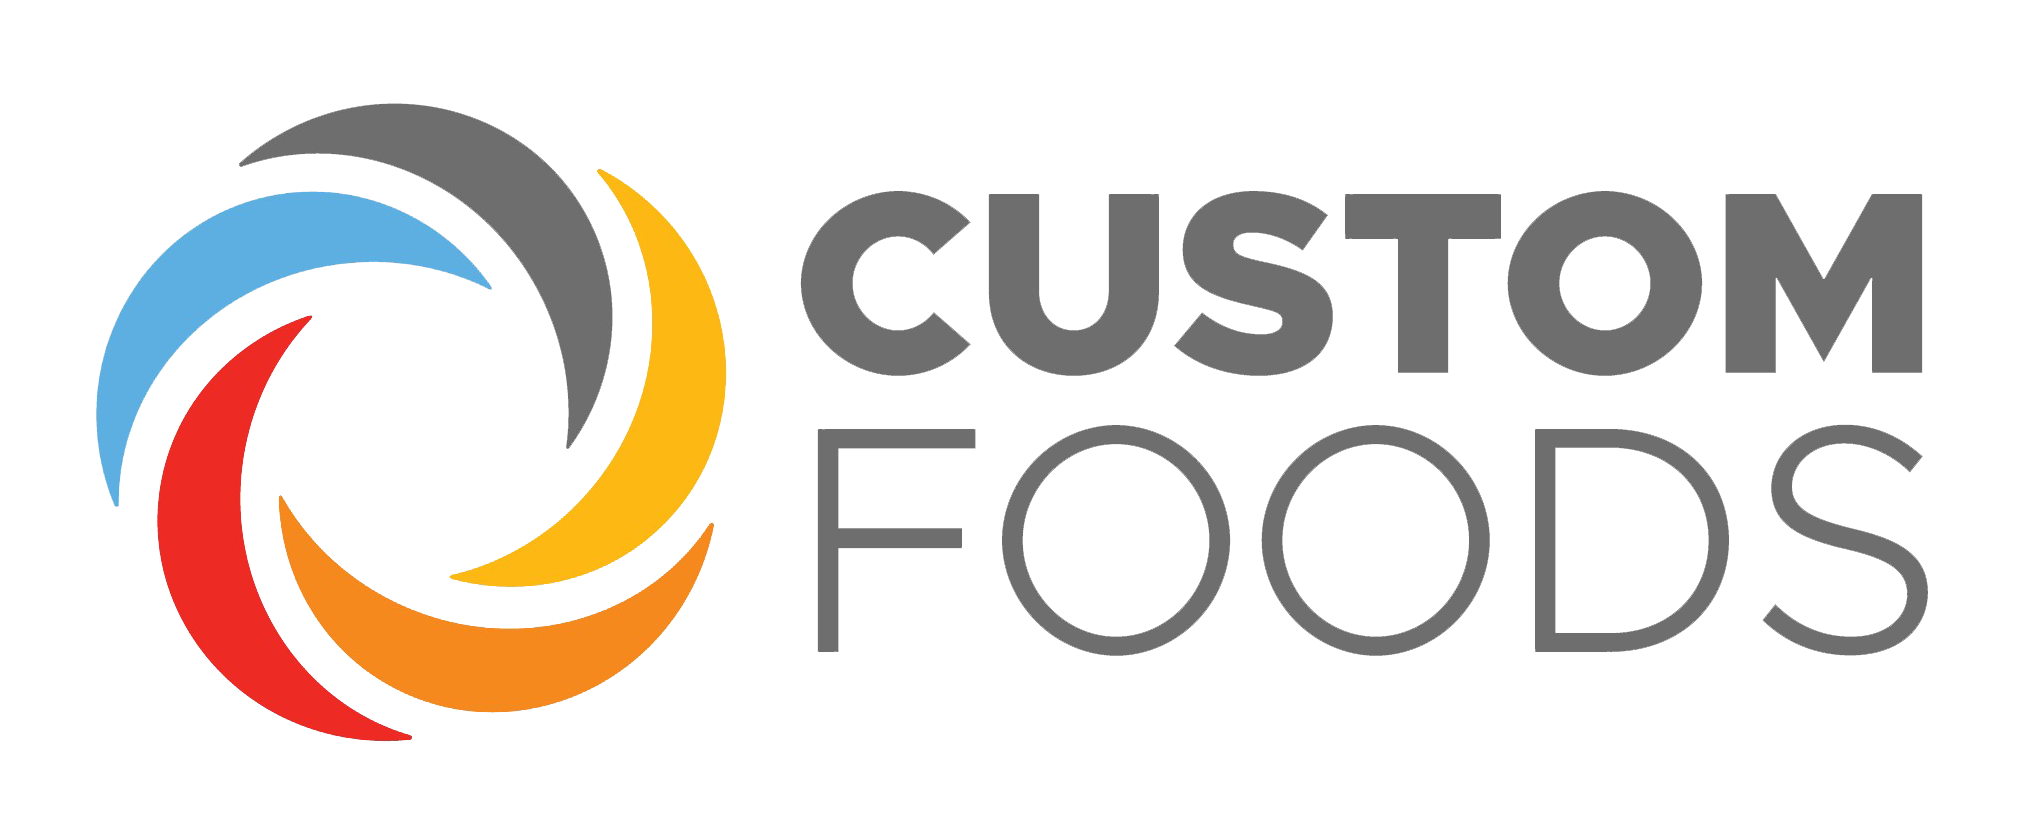 Custom_foods